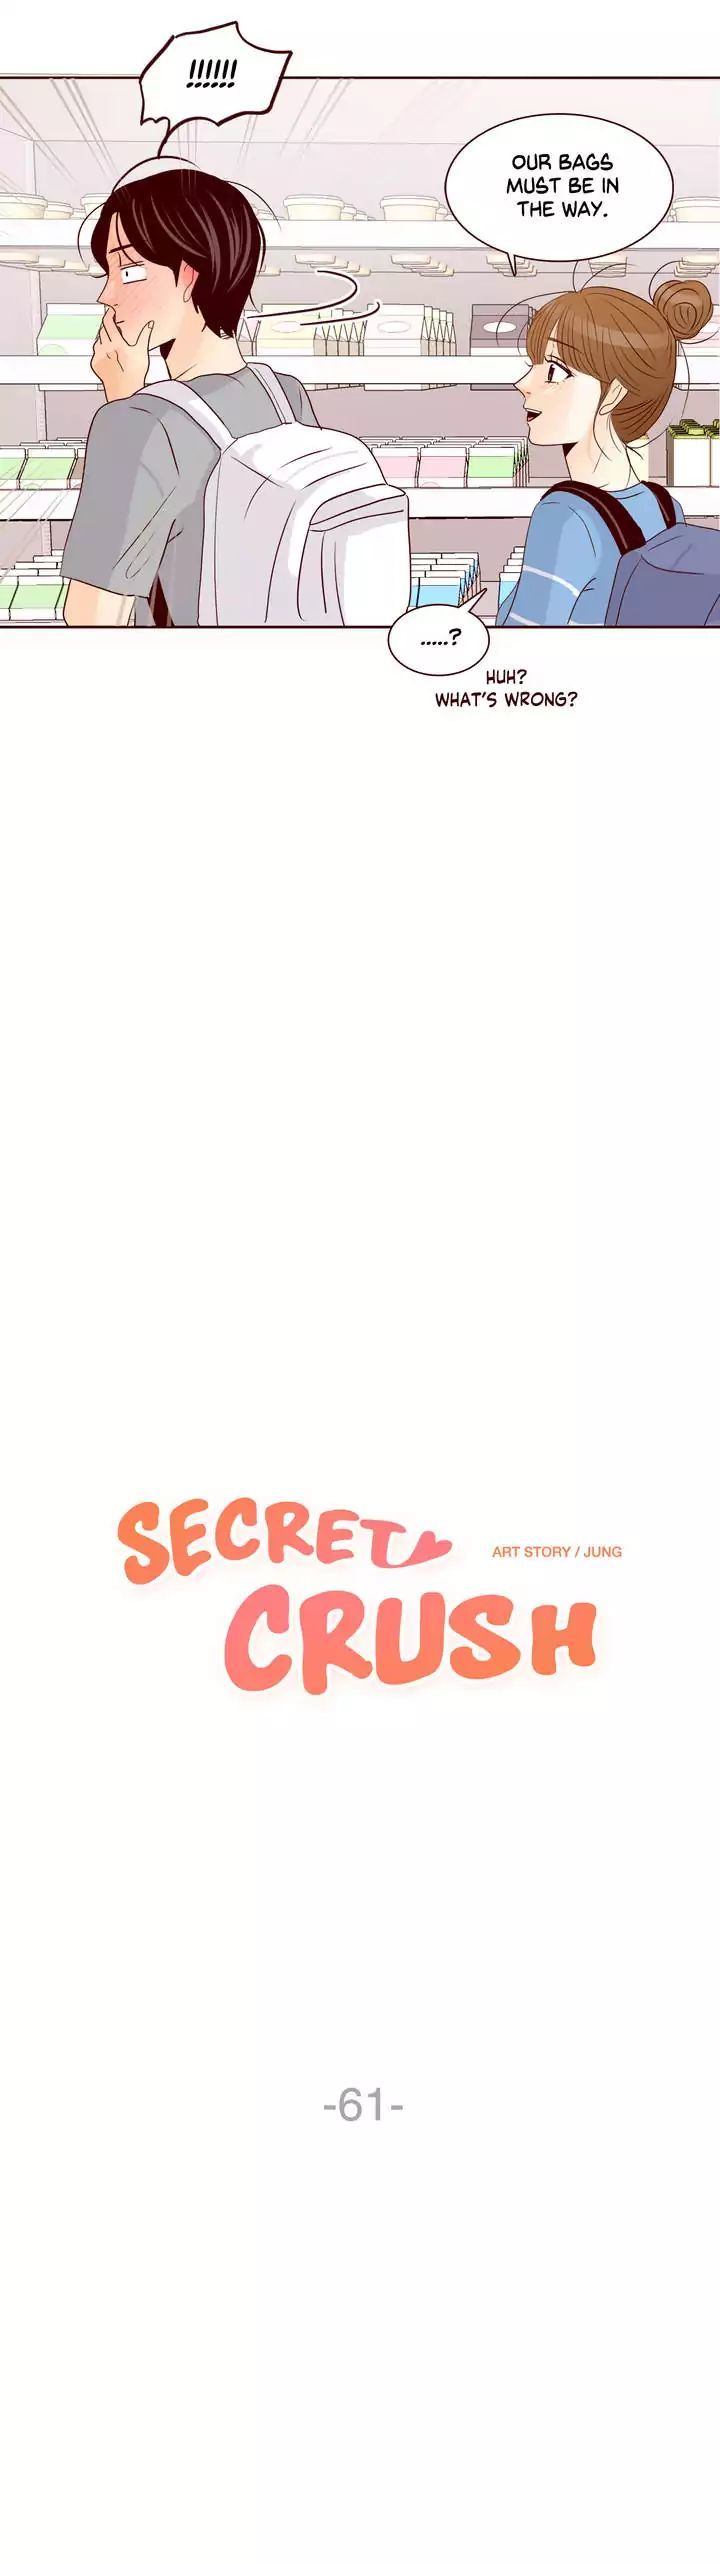 Secret Crush 61